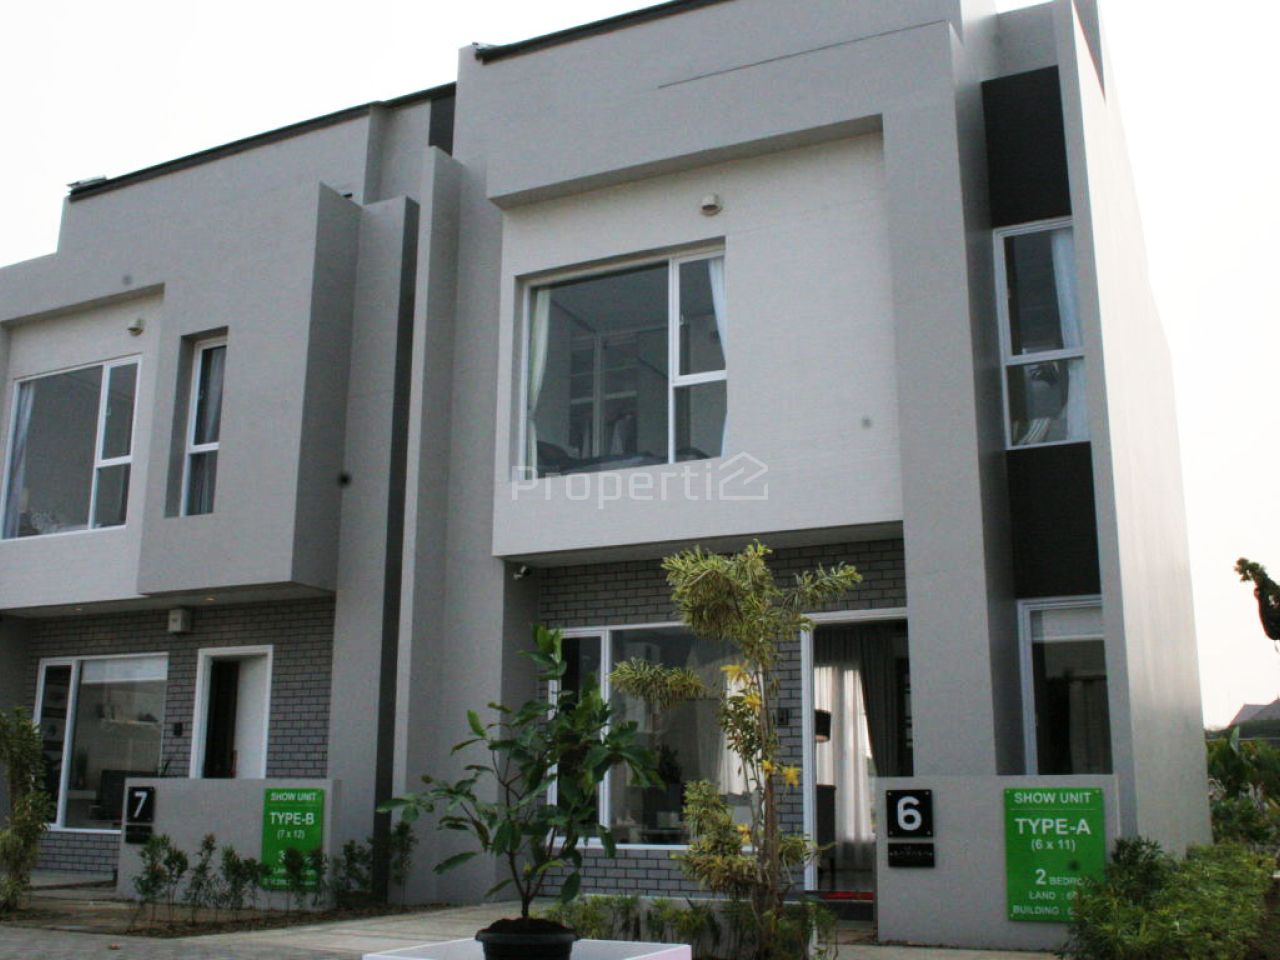 Savasa Modern House in Deltamas City, Jawa Barat